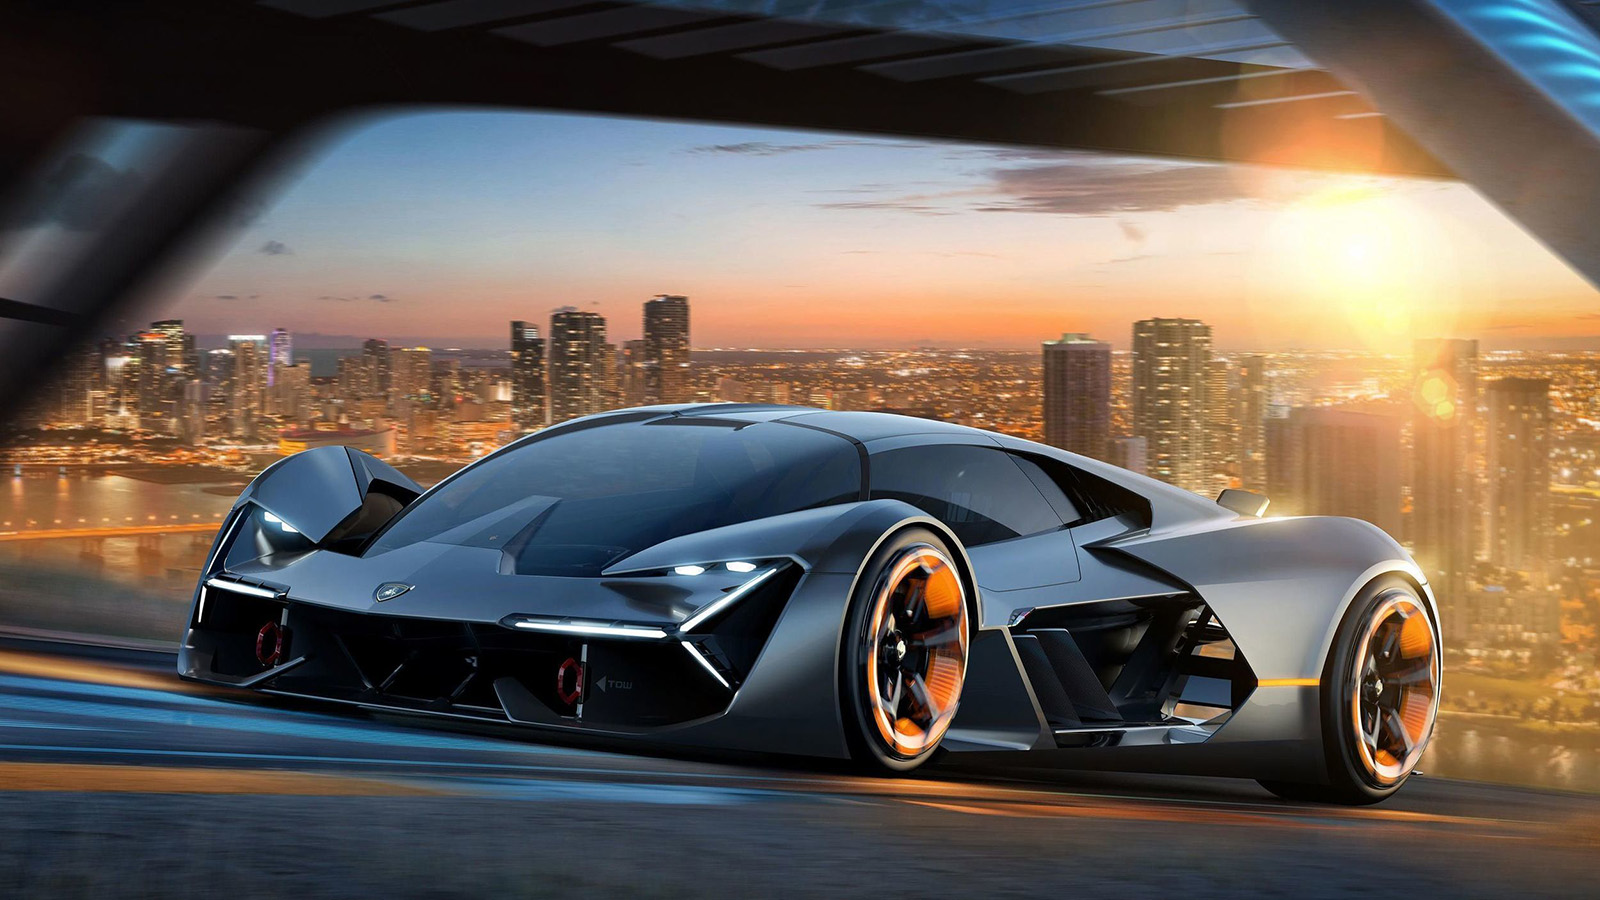 Lamborghini เปิดตัว Terzo Millennio : คอนเซ็ปต์ “ซูเปอร์คาร์ไฟฟ้า” สุดล้ำอนาคต